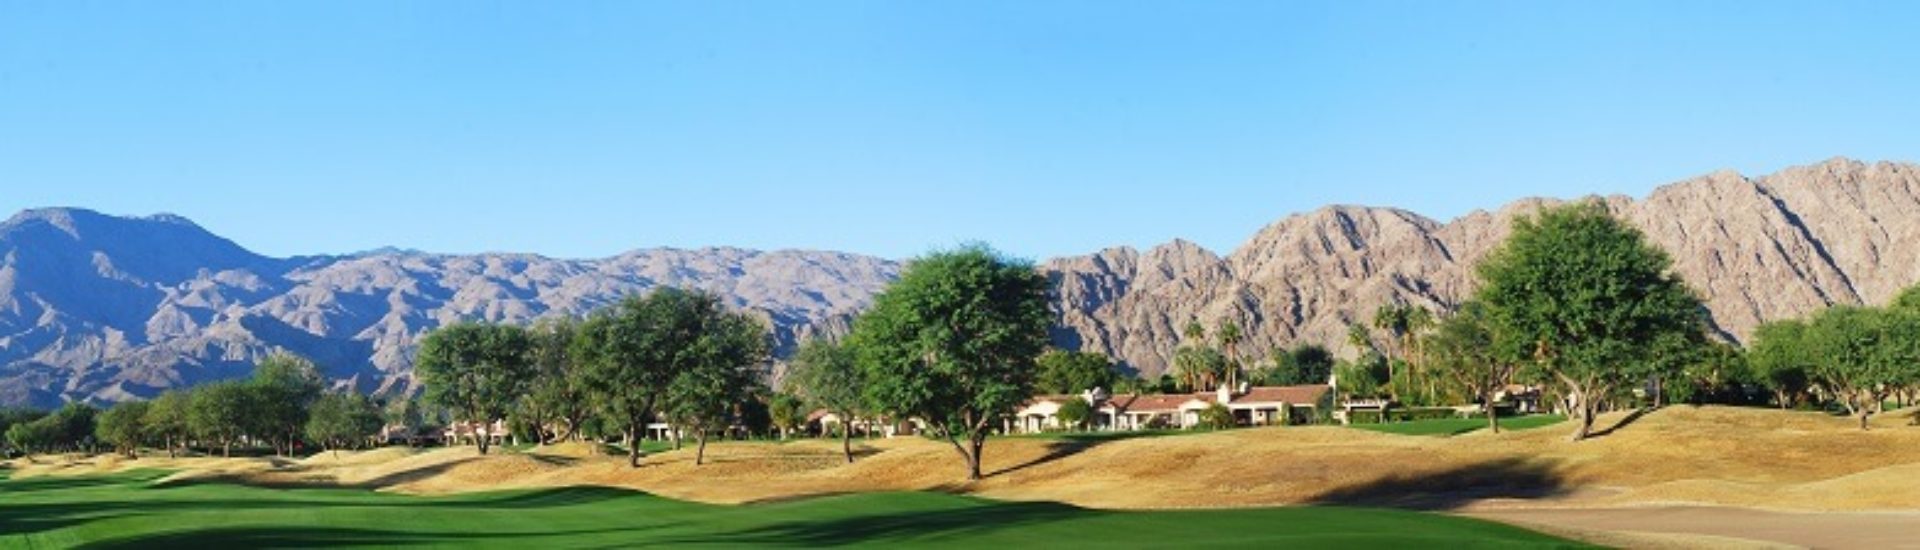 Panorama vom La Qunita Golfkurs